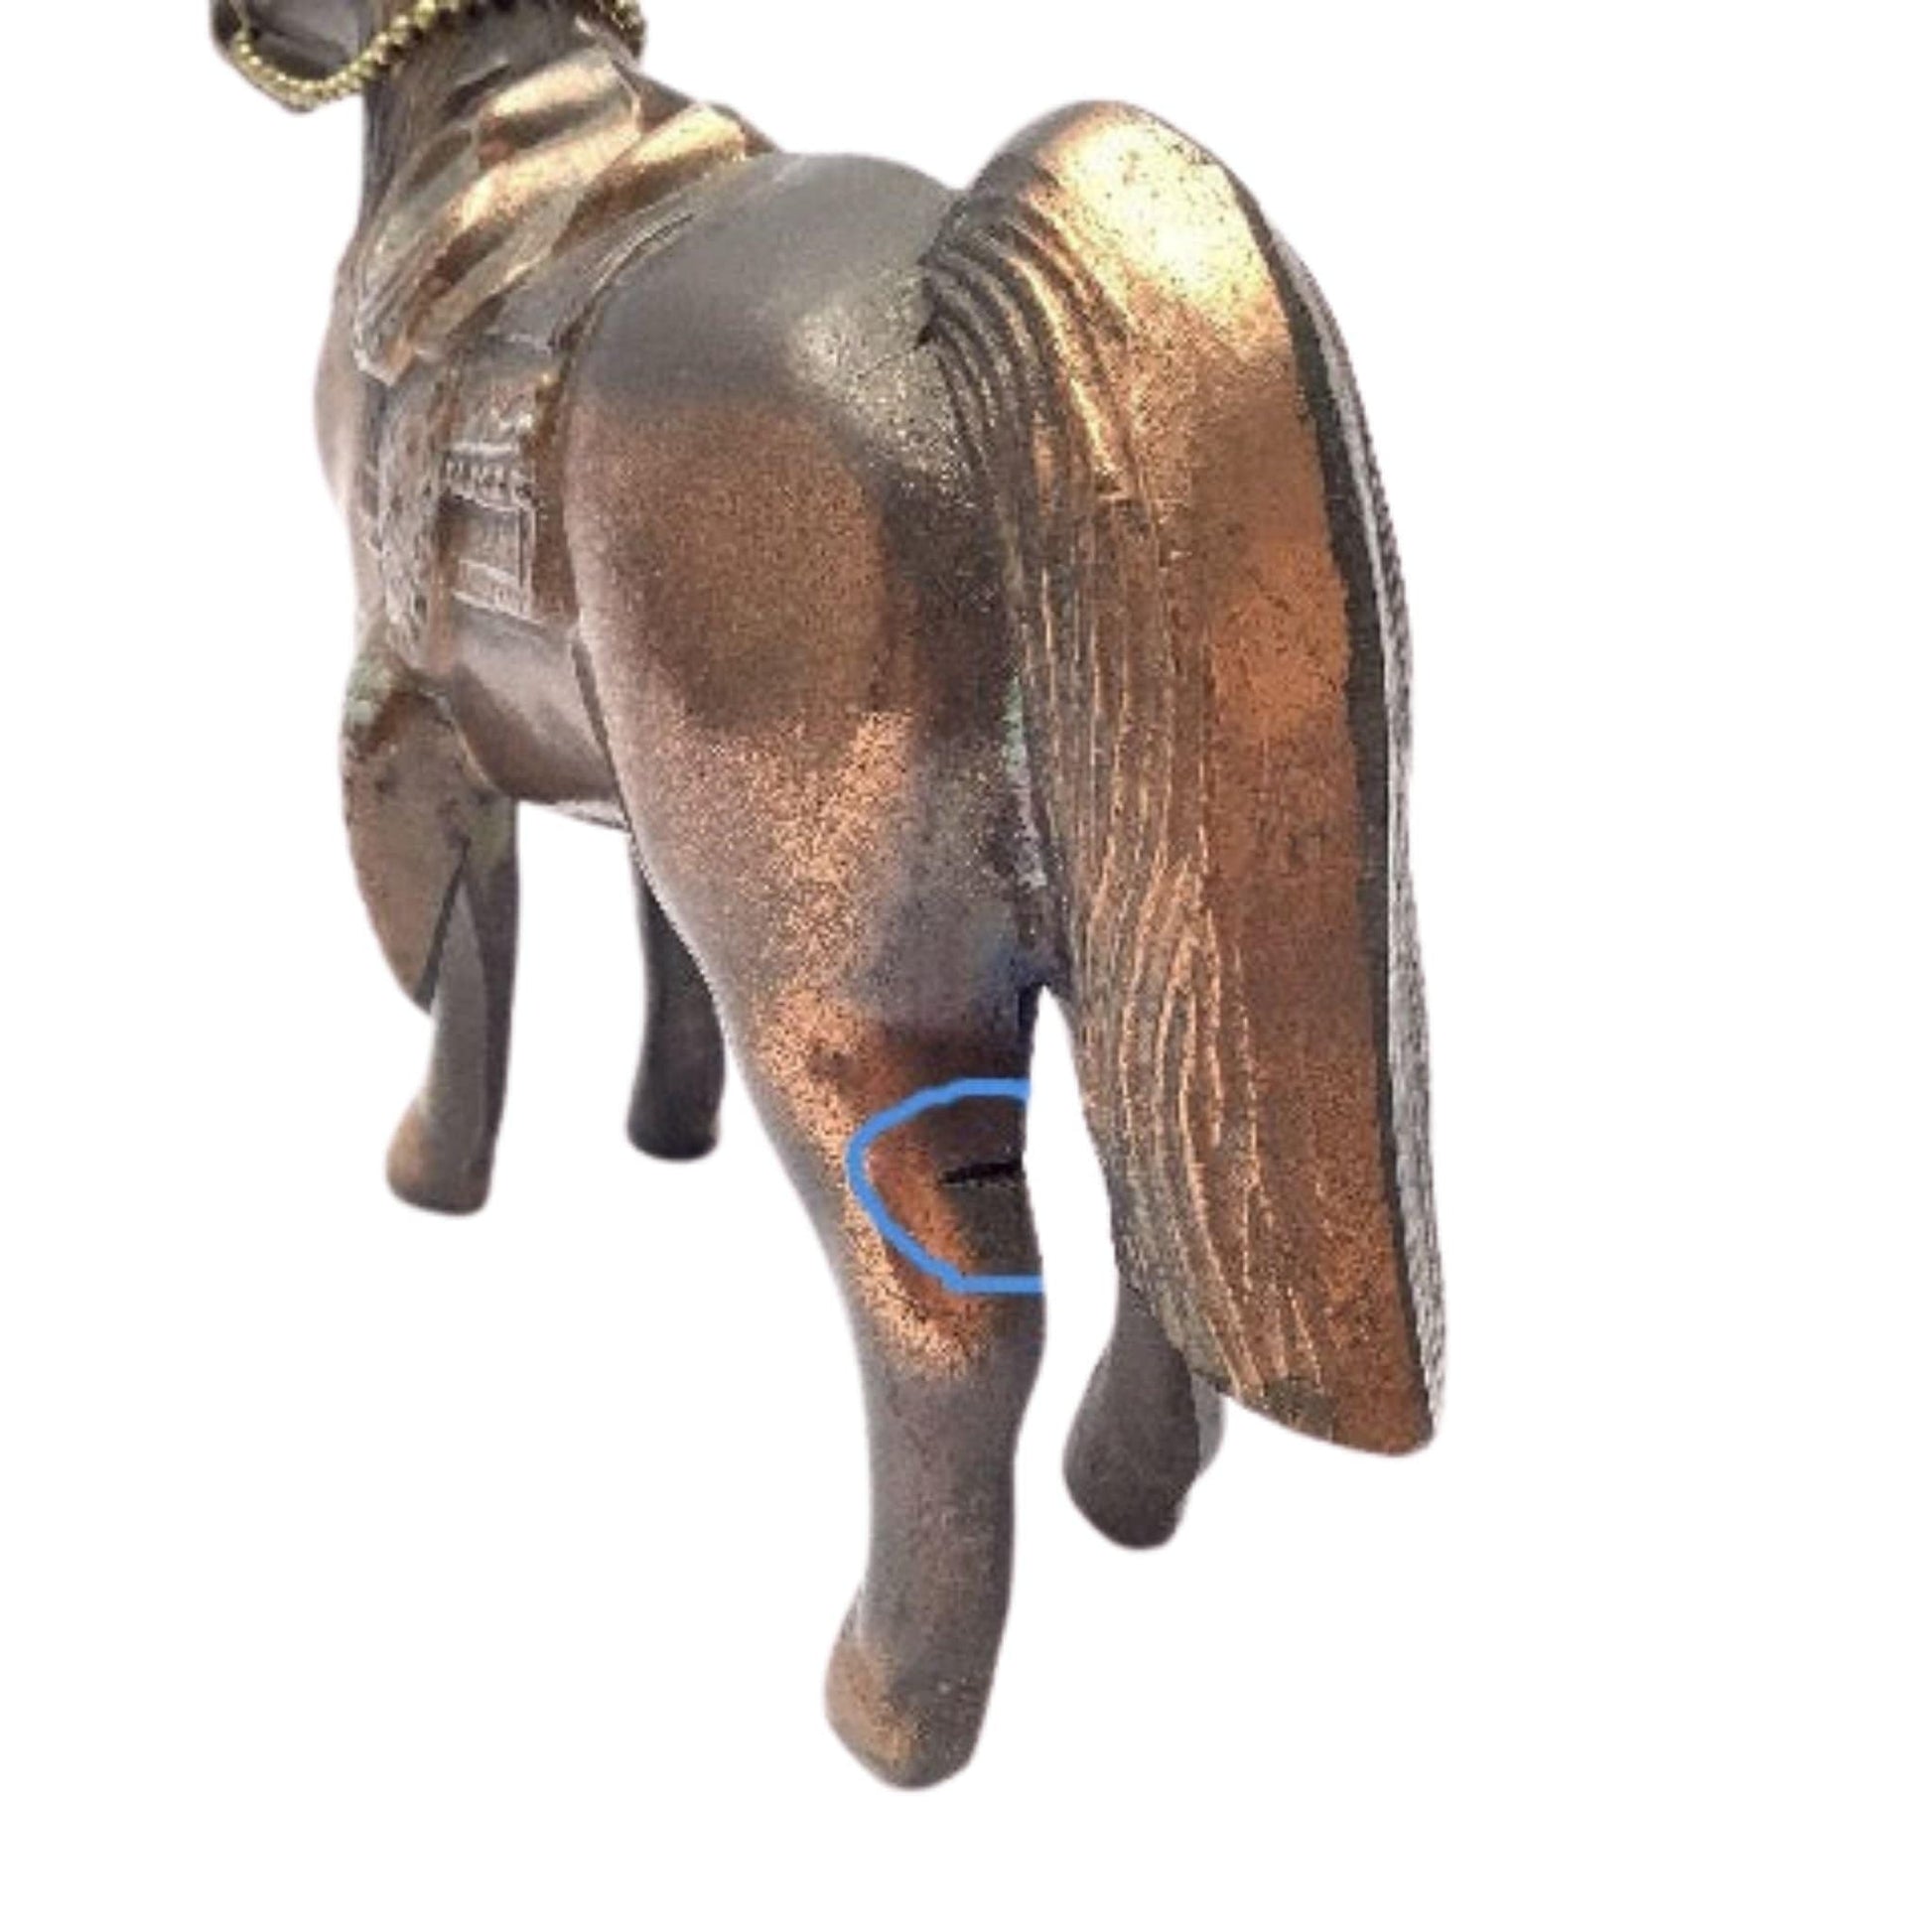 Vintage Horse Figurines Metal / Copper / Vintage 1940s